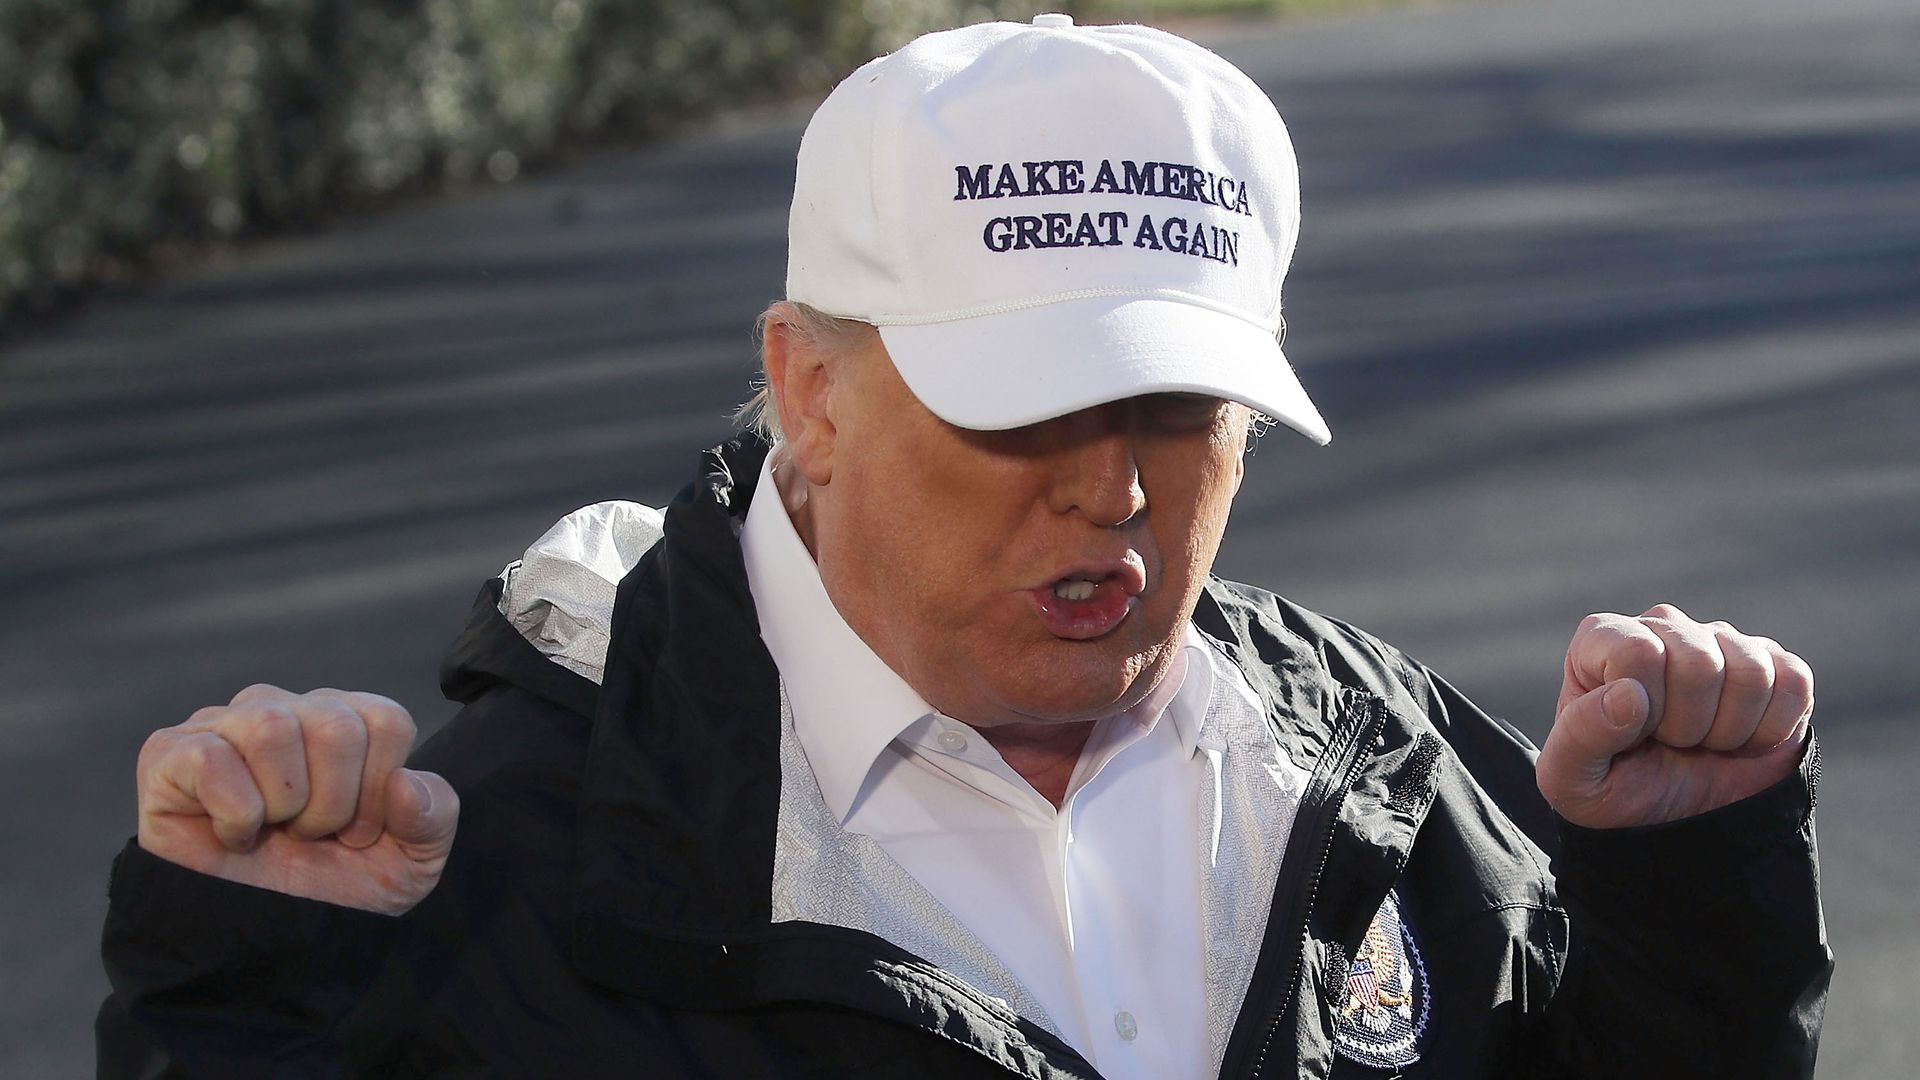 President Trump in "Make America Great Again" hat